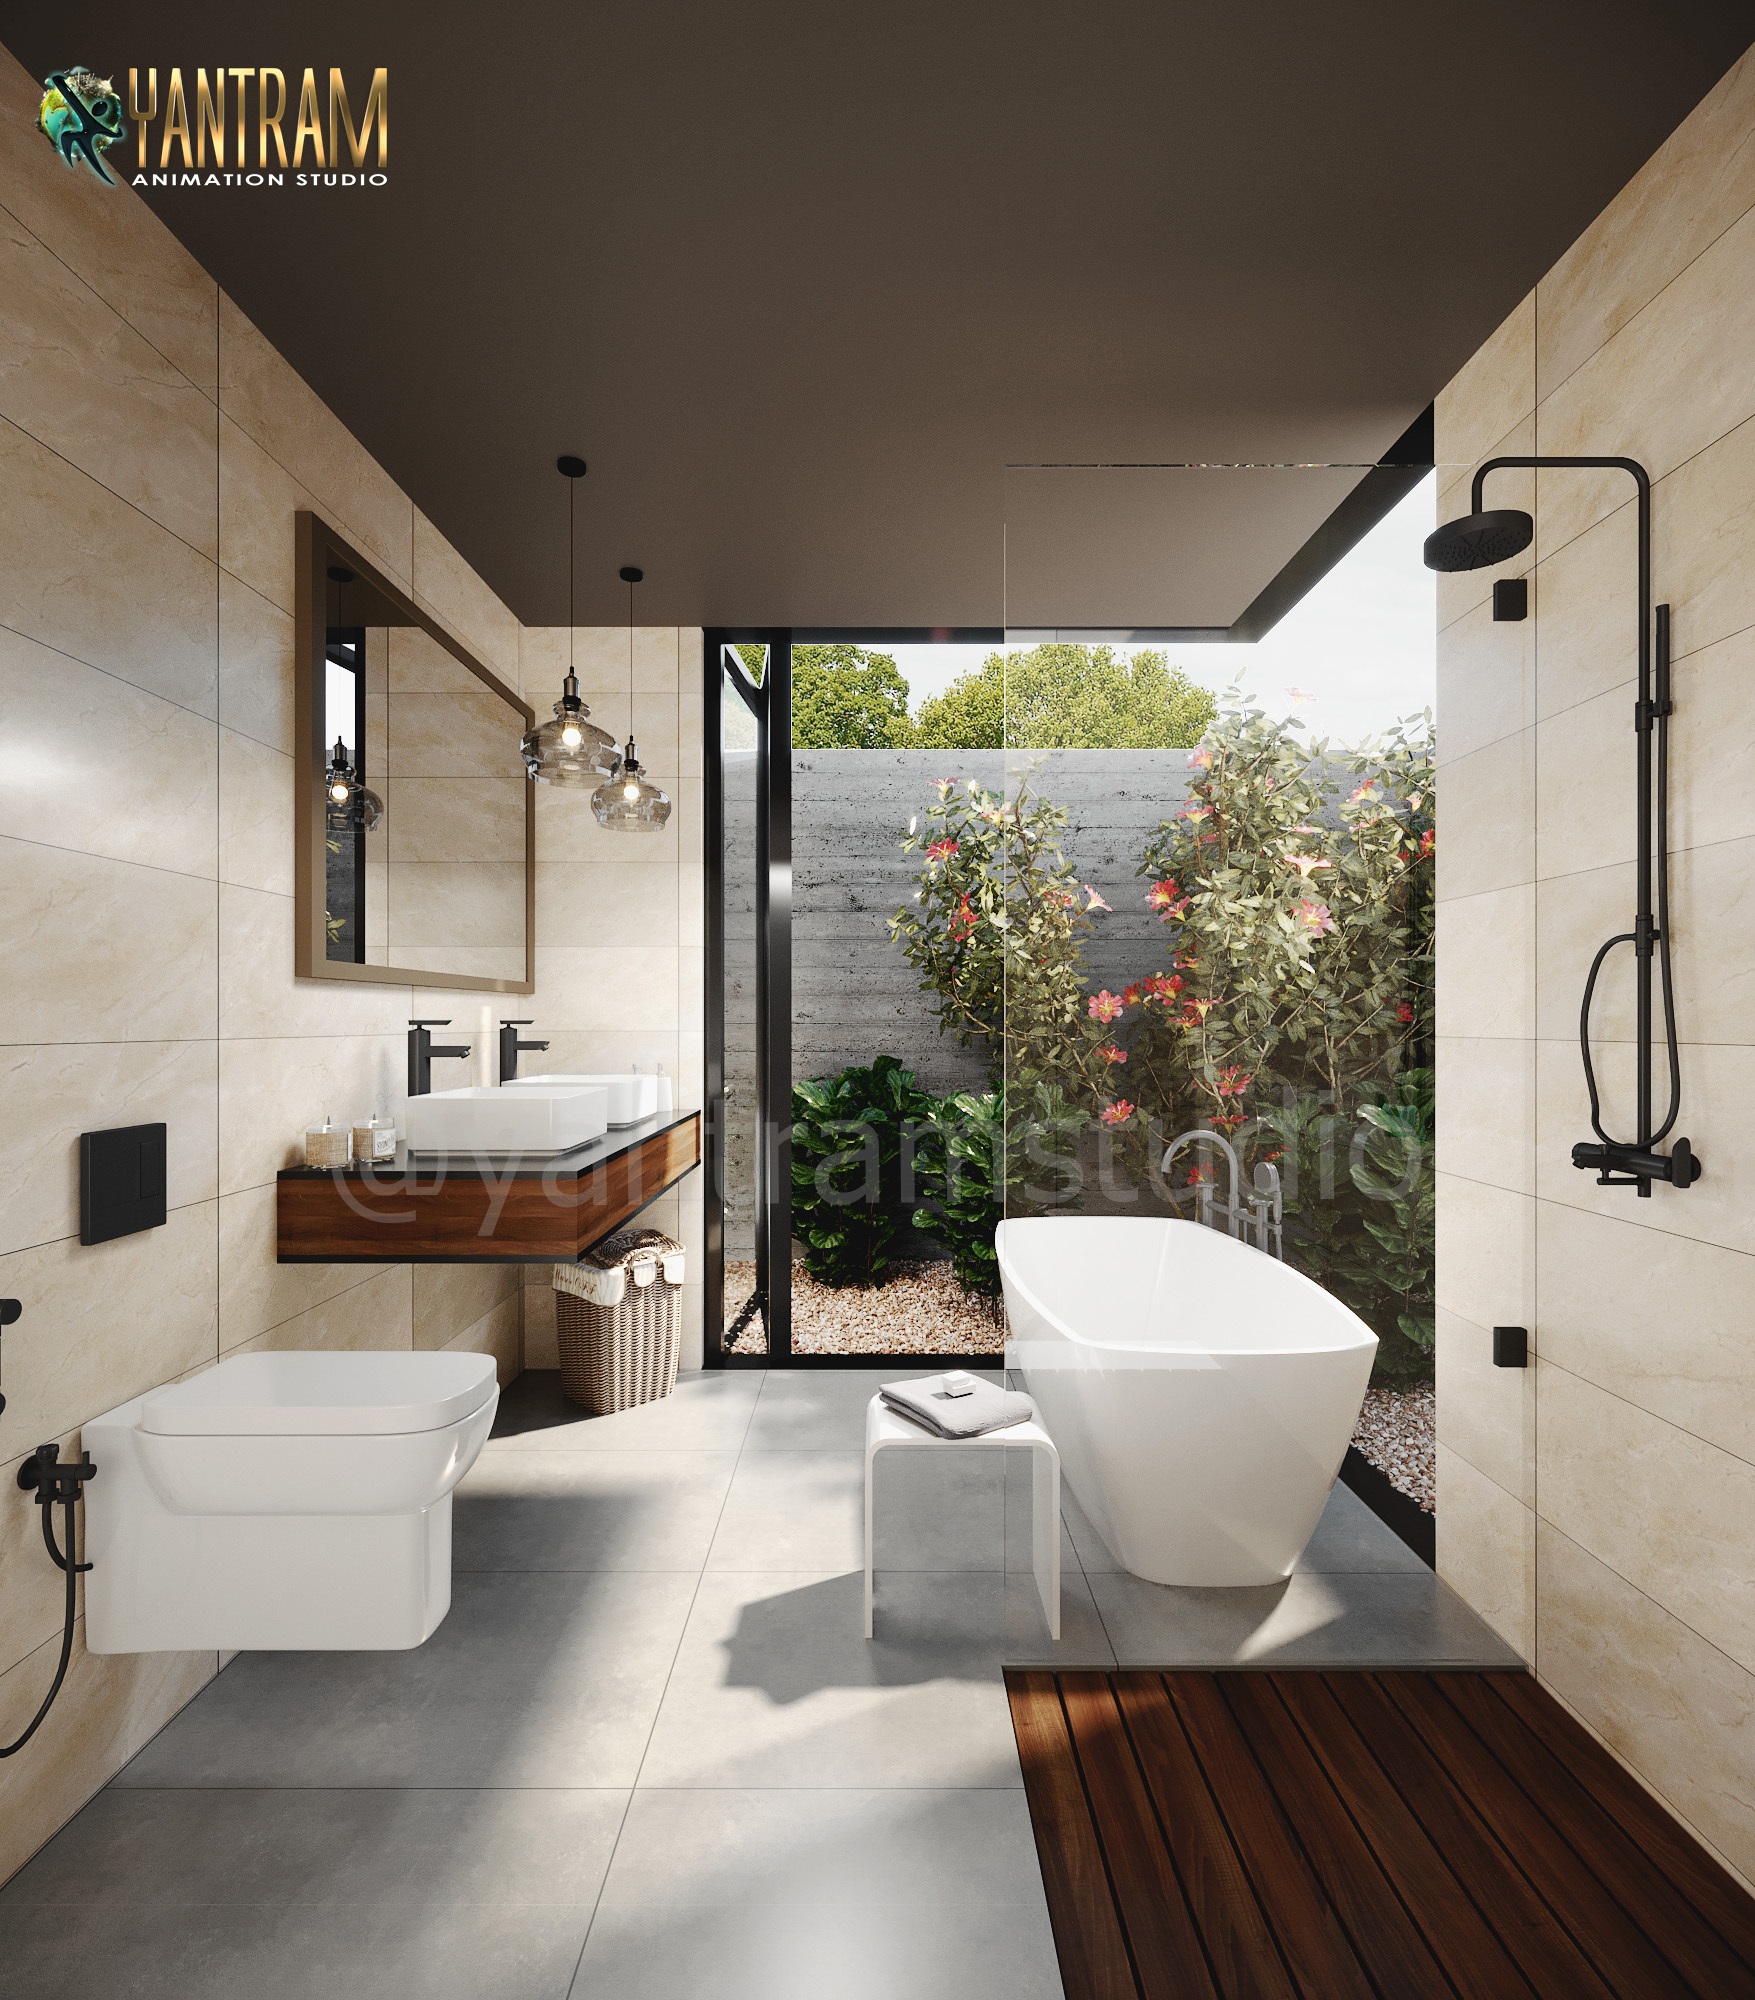 Gorgeous Bathroom Concept By Yantram 3d Interior Design studio, Texas- USA